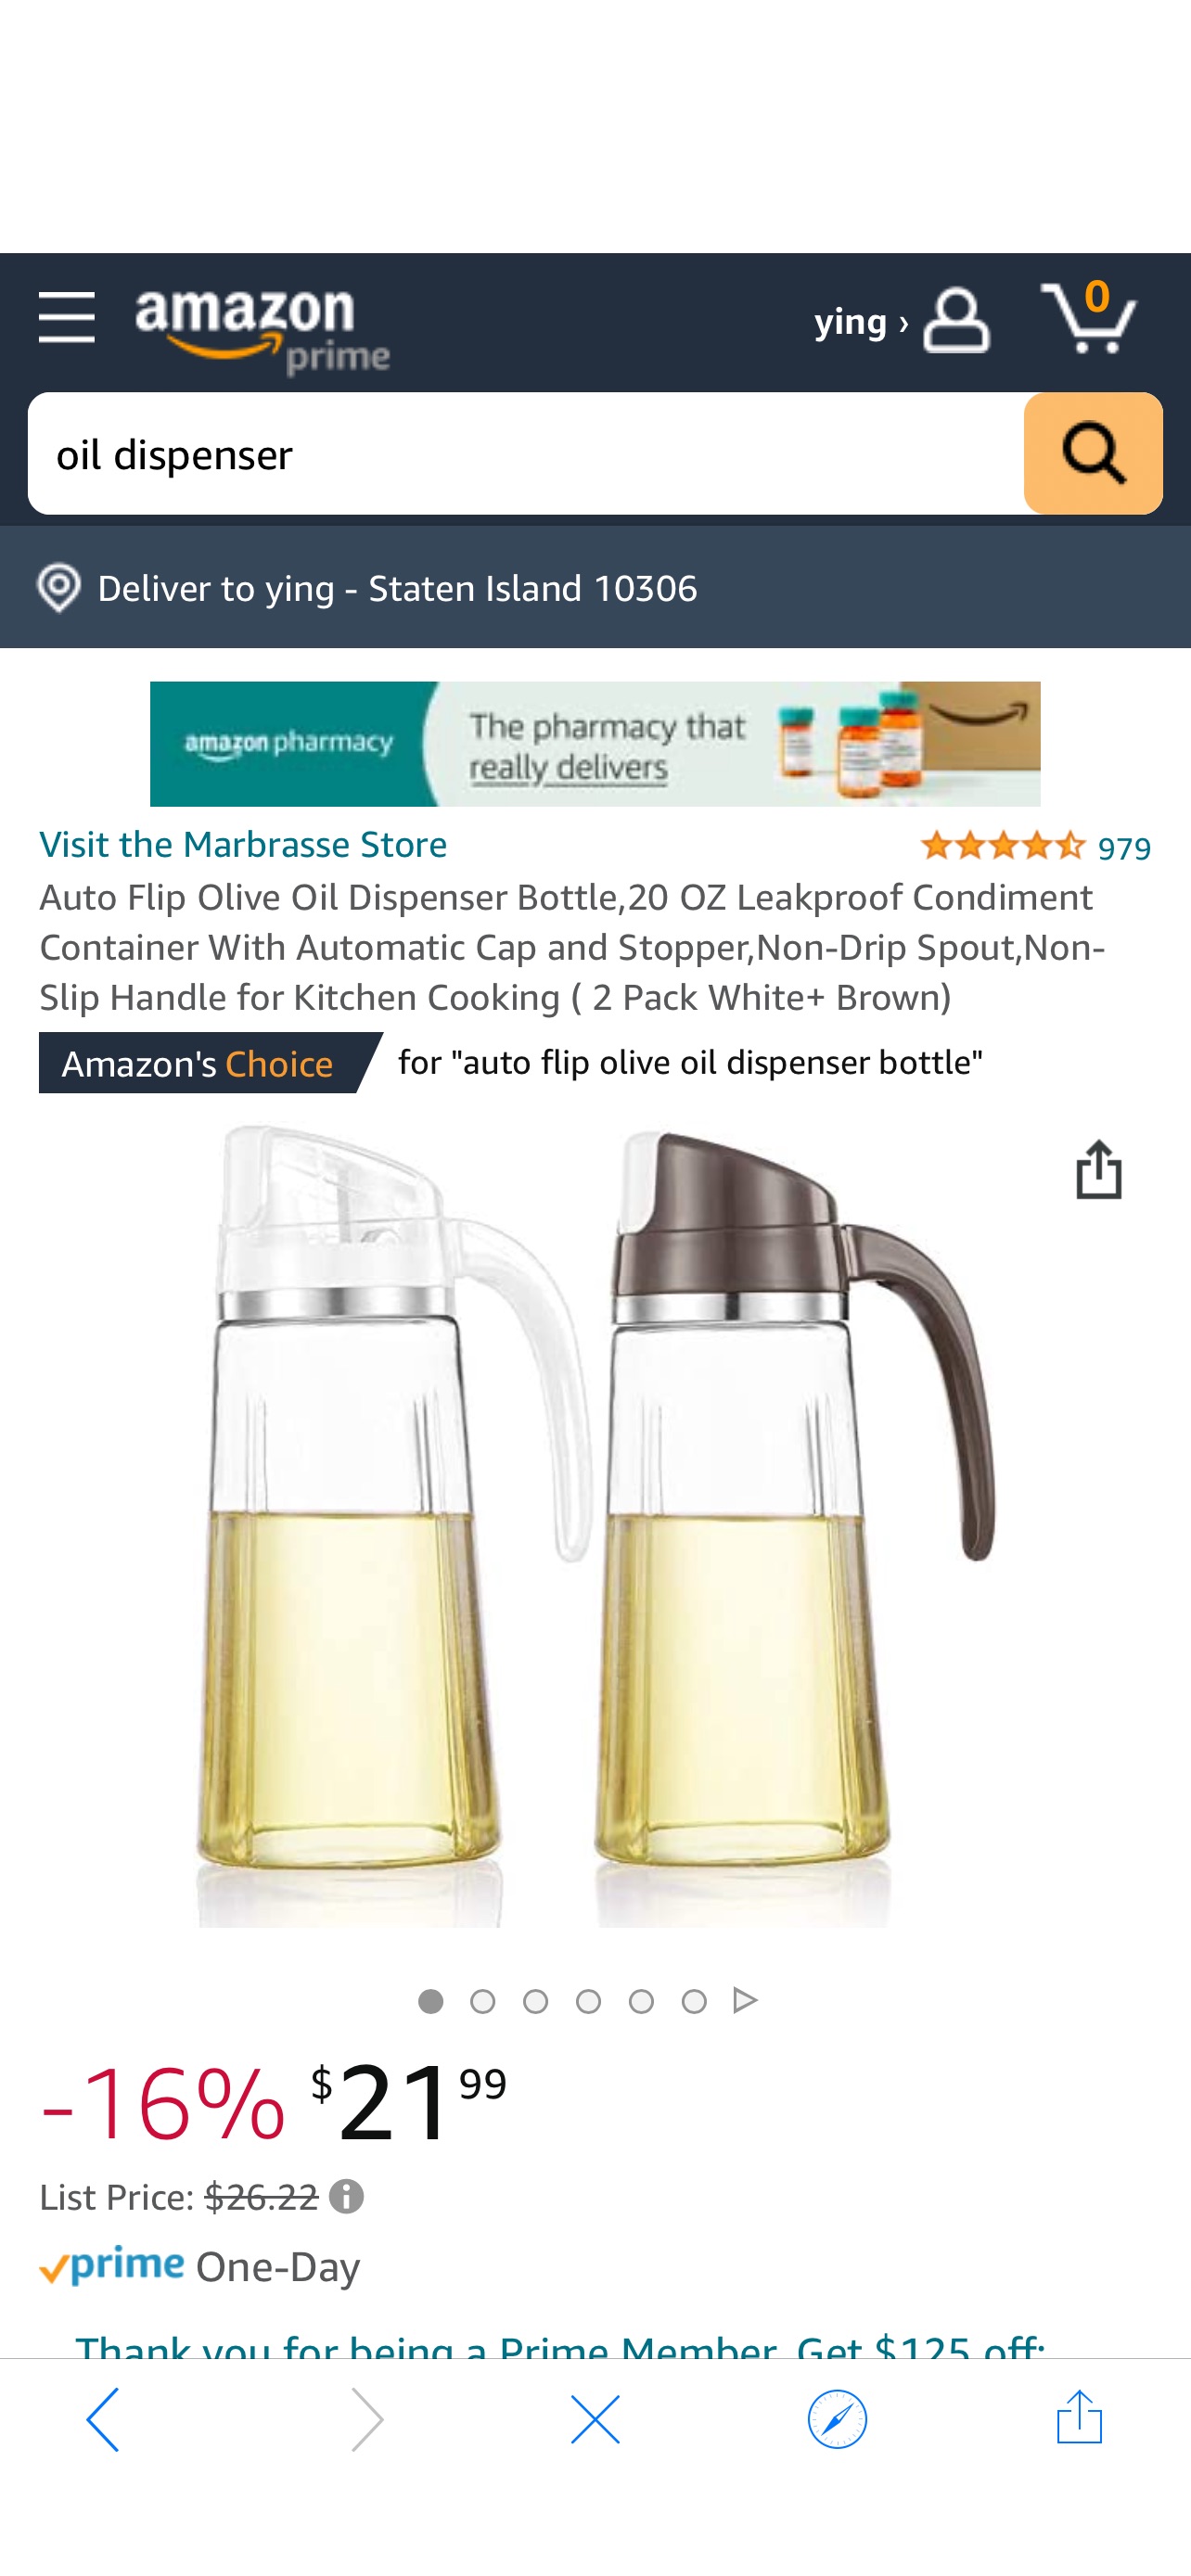 Amazon.com: Auto Flip Olive Oil Dispenser Bottle,20 OZ Leakproof Condiment Container With Automatic Cap and Stopper,Non-Drip Spout: Home & Kitchen